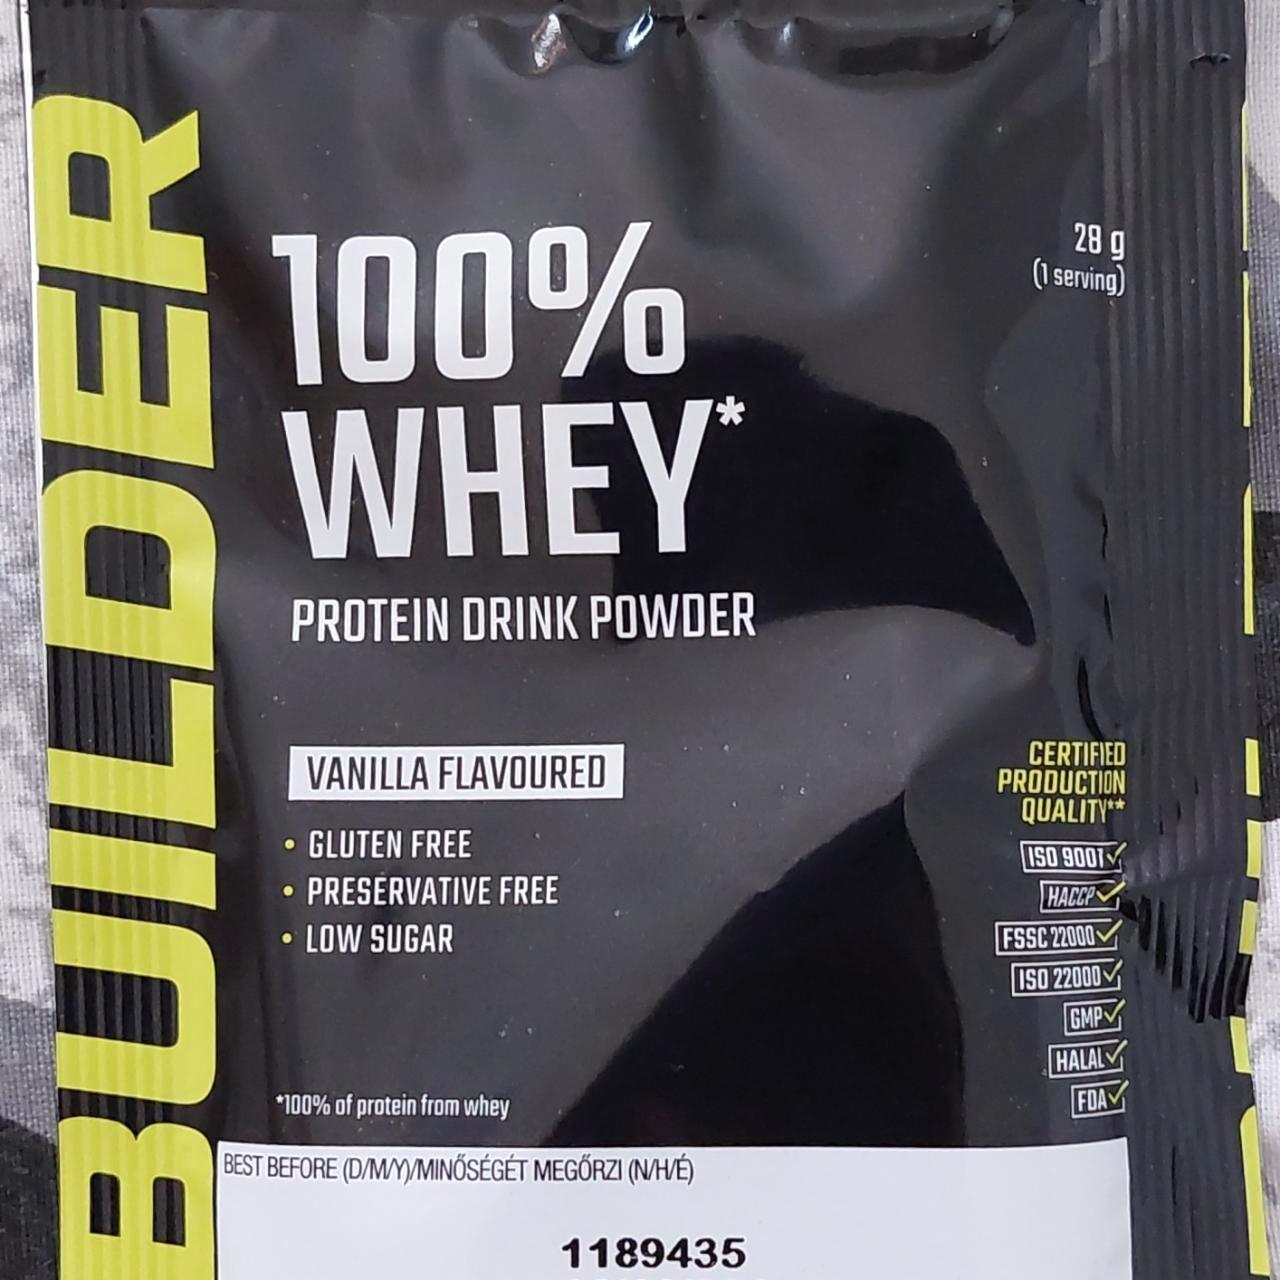 Képek - 100% whey protein drink powder Vanília Builder